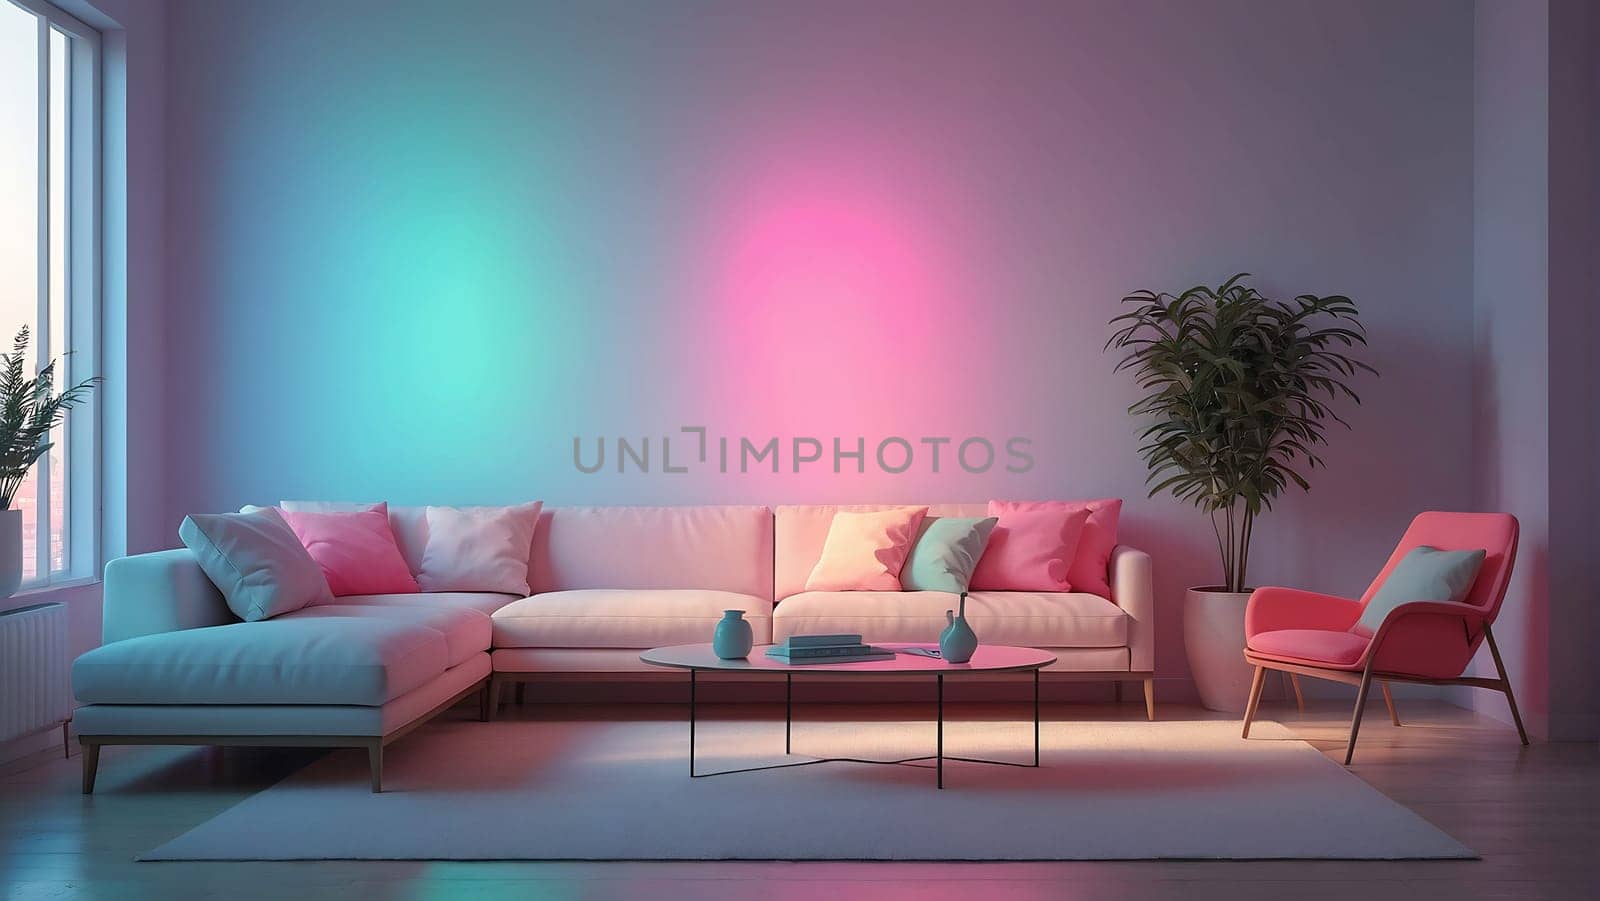 Aesthetic minimalist Cyberpunk interior design with empty wall mockup in vibrant neon color theme. by maenjari